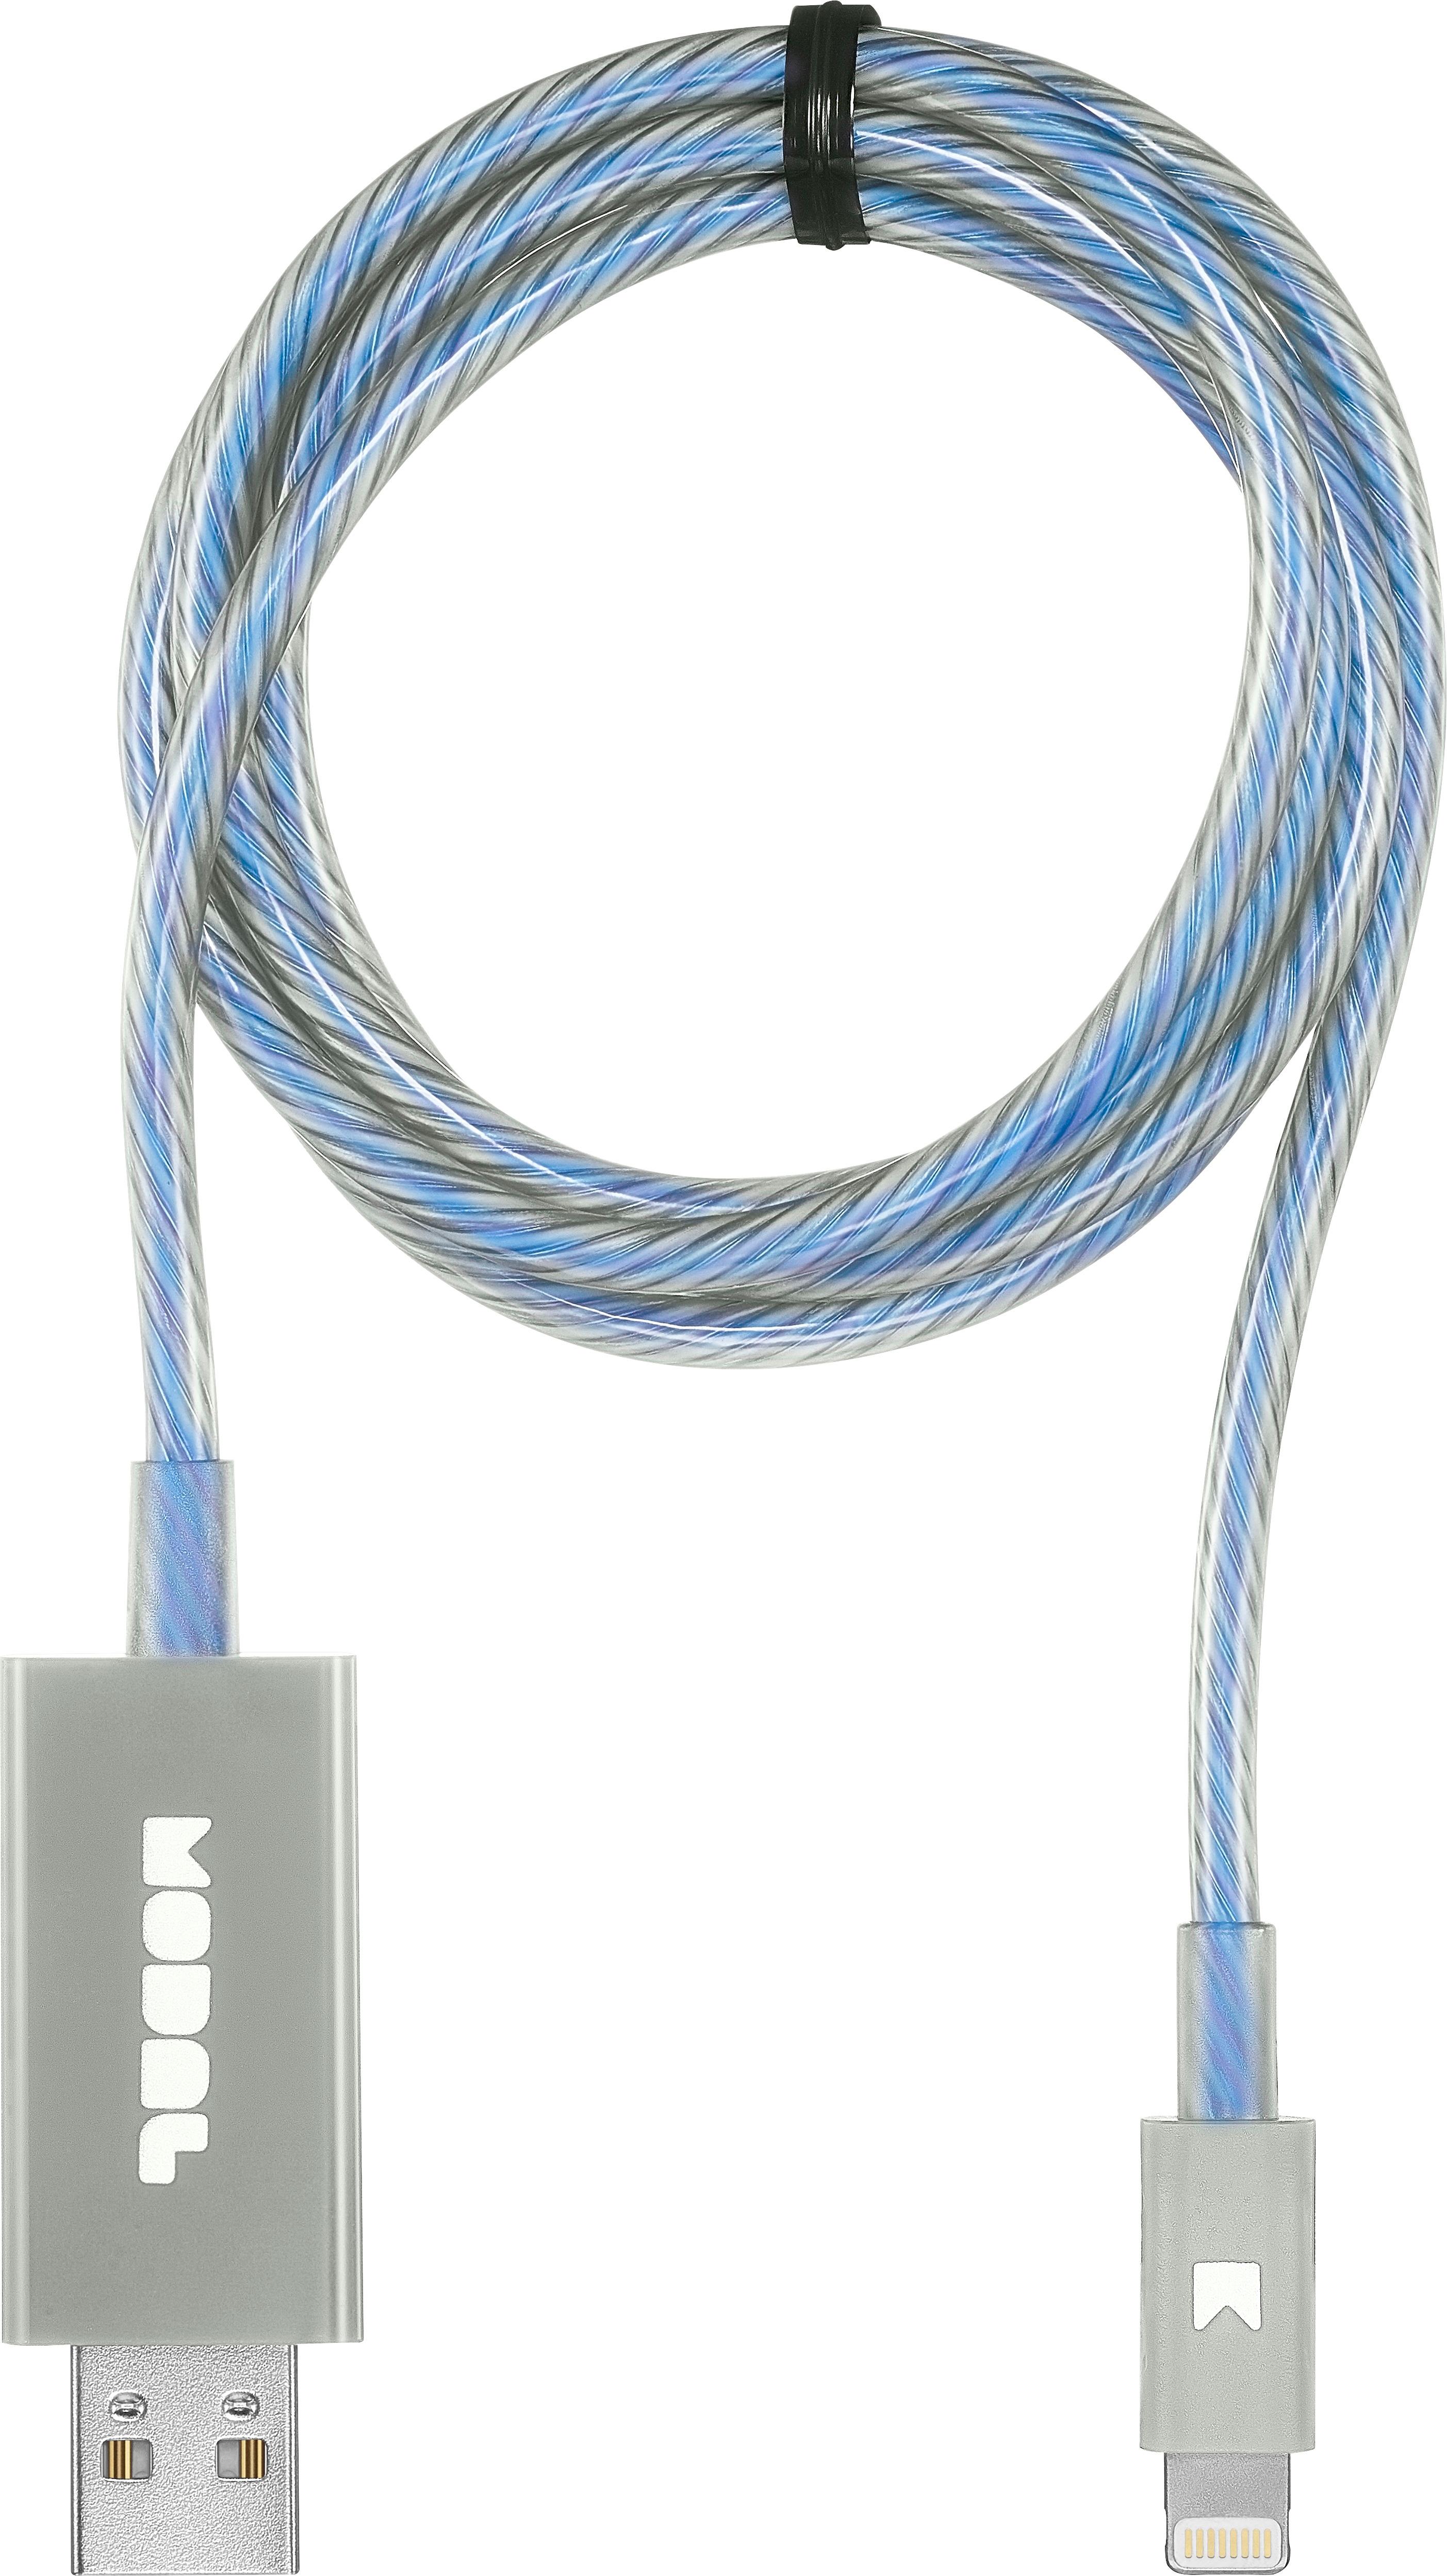 Cable USB-C a Lightning (iPhone) 1mt modelo US387 Certifi